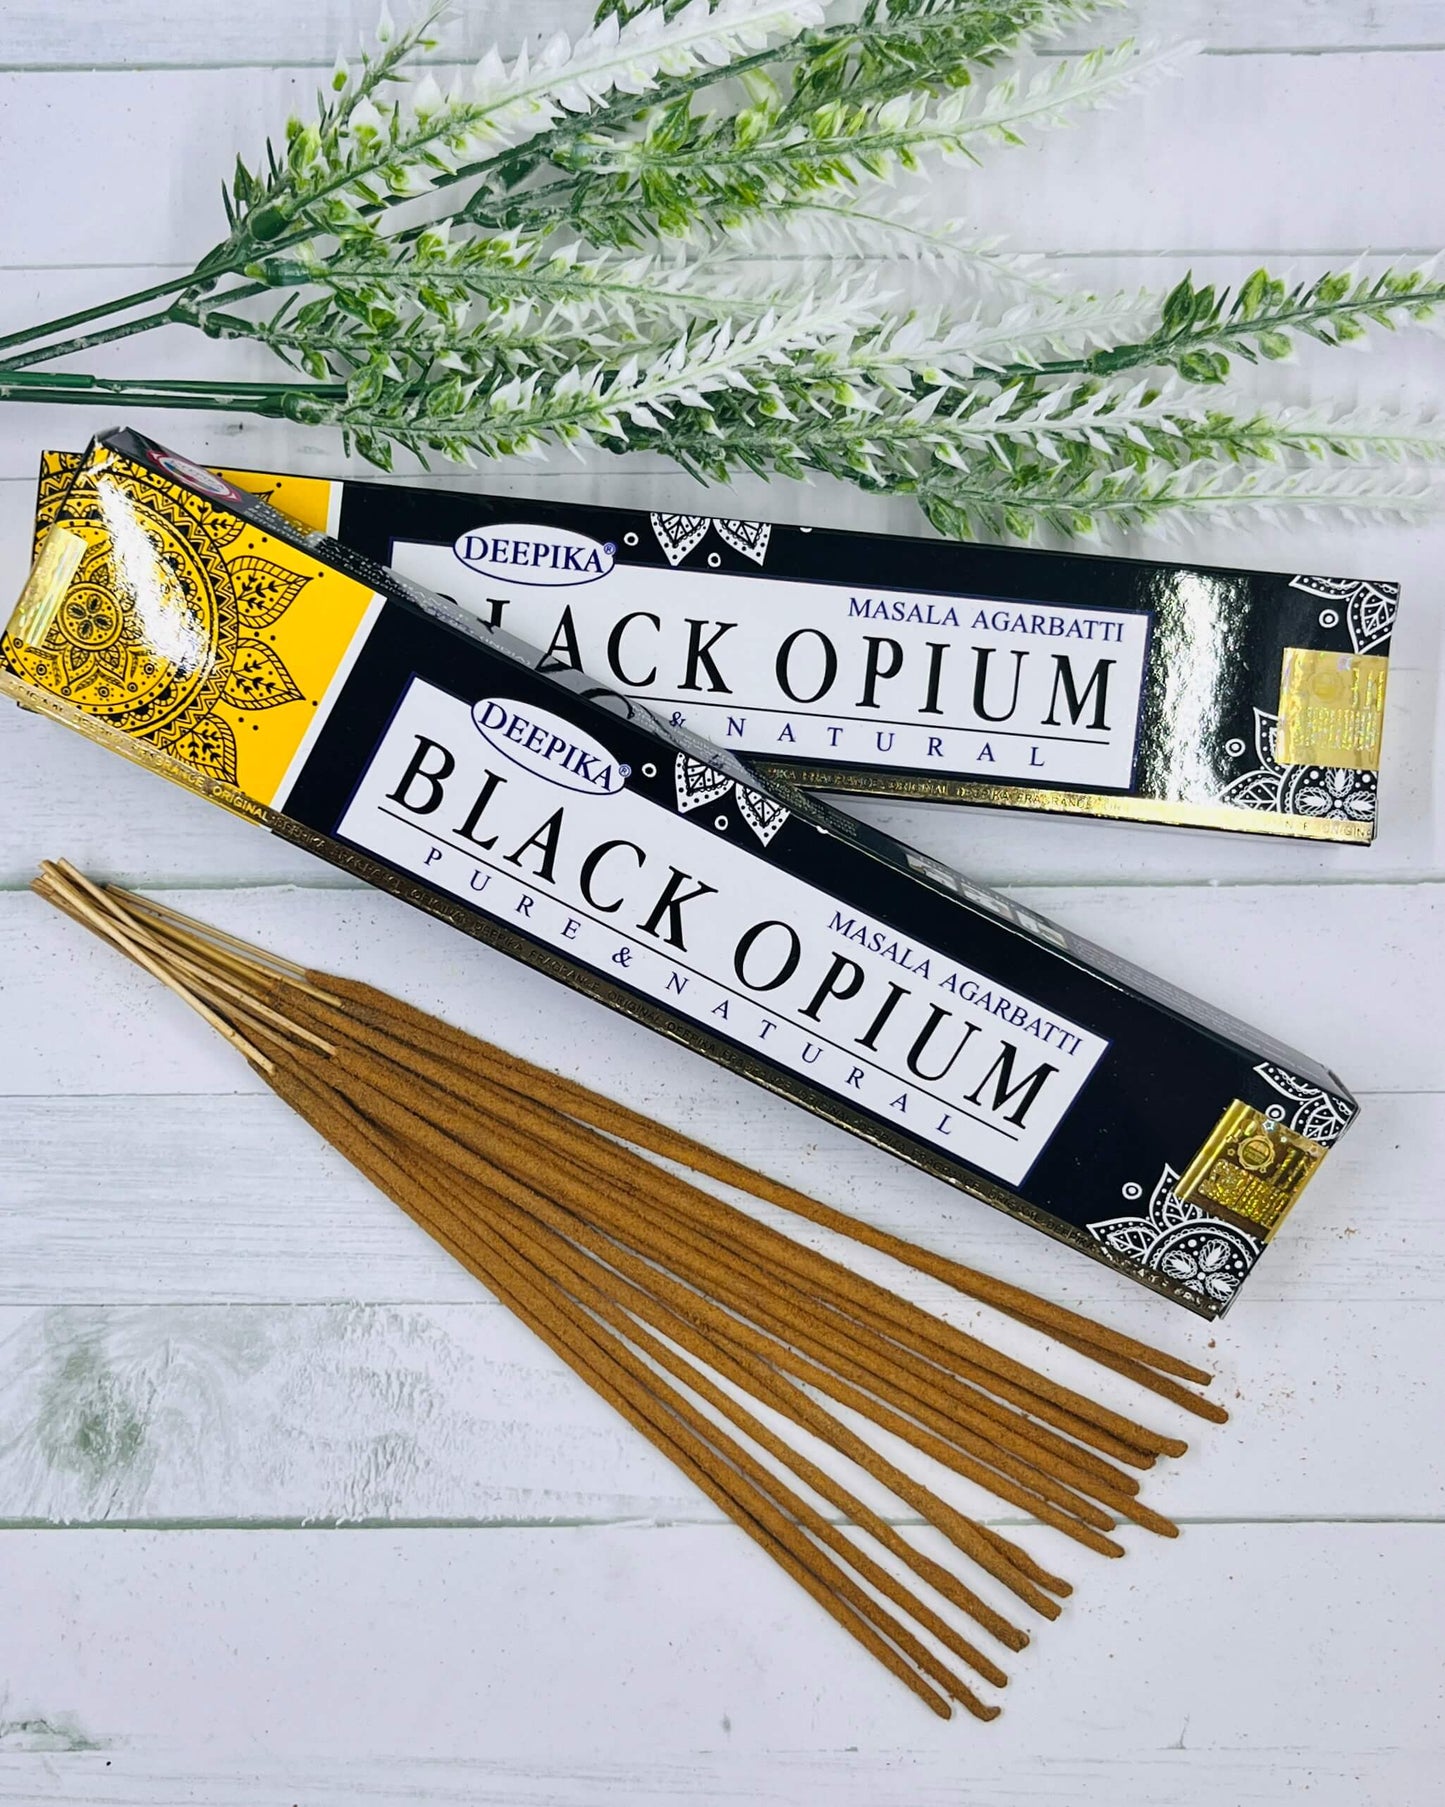 Deepika Black Opium incense